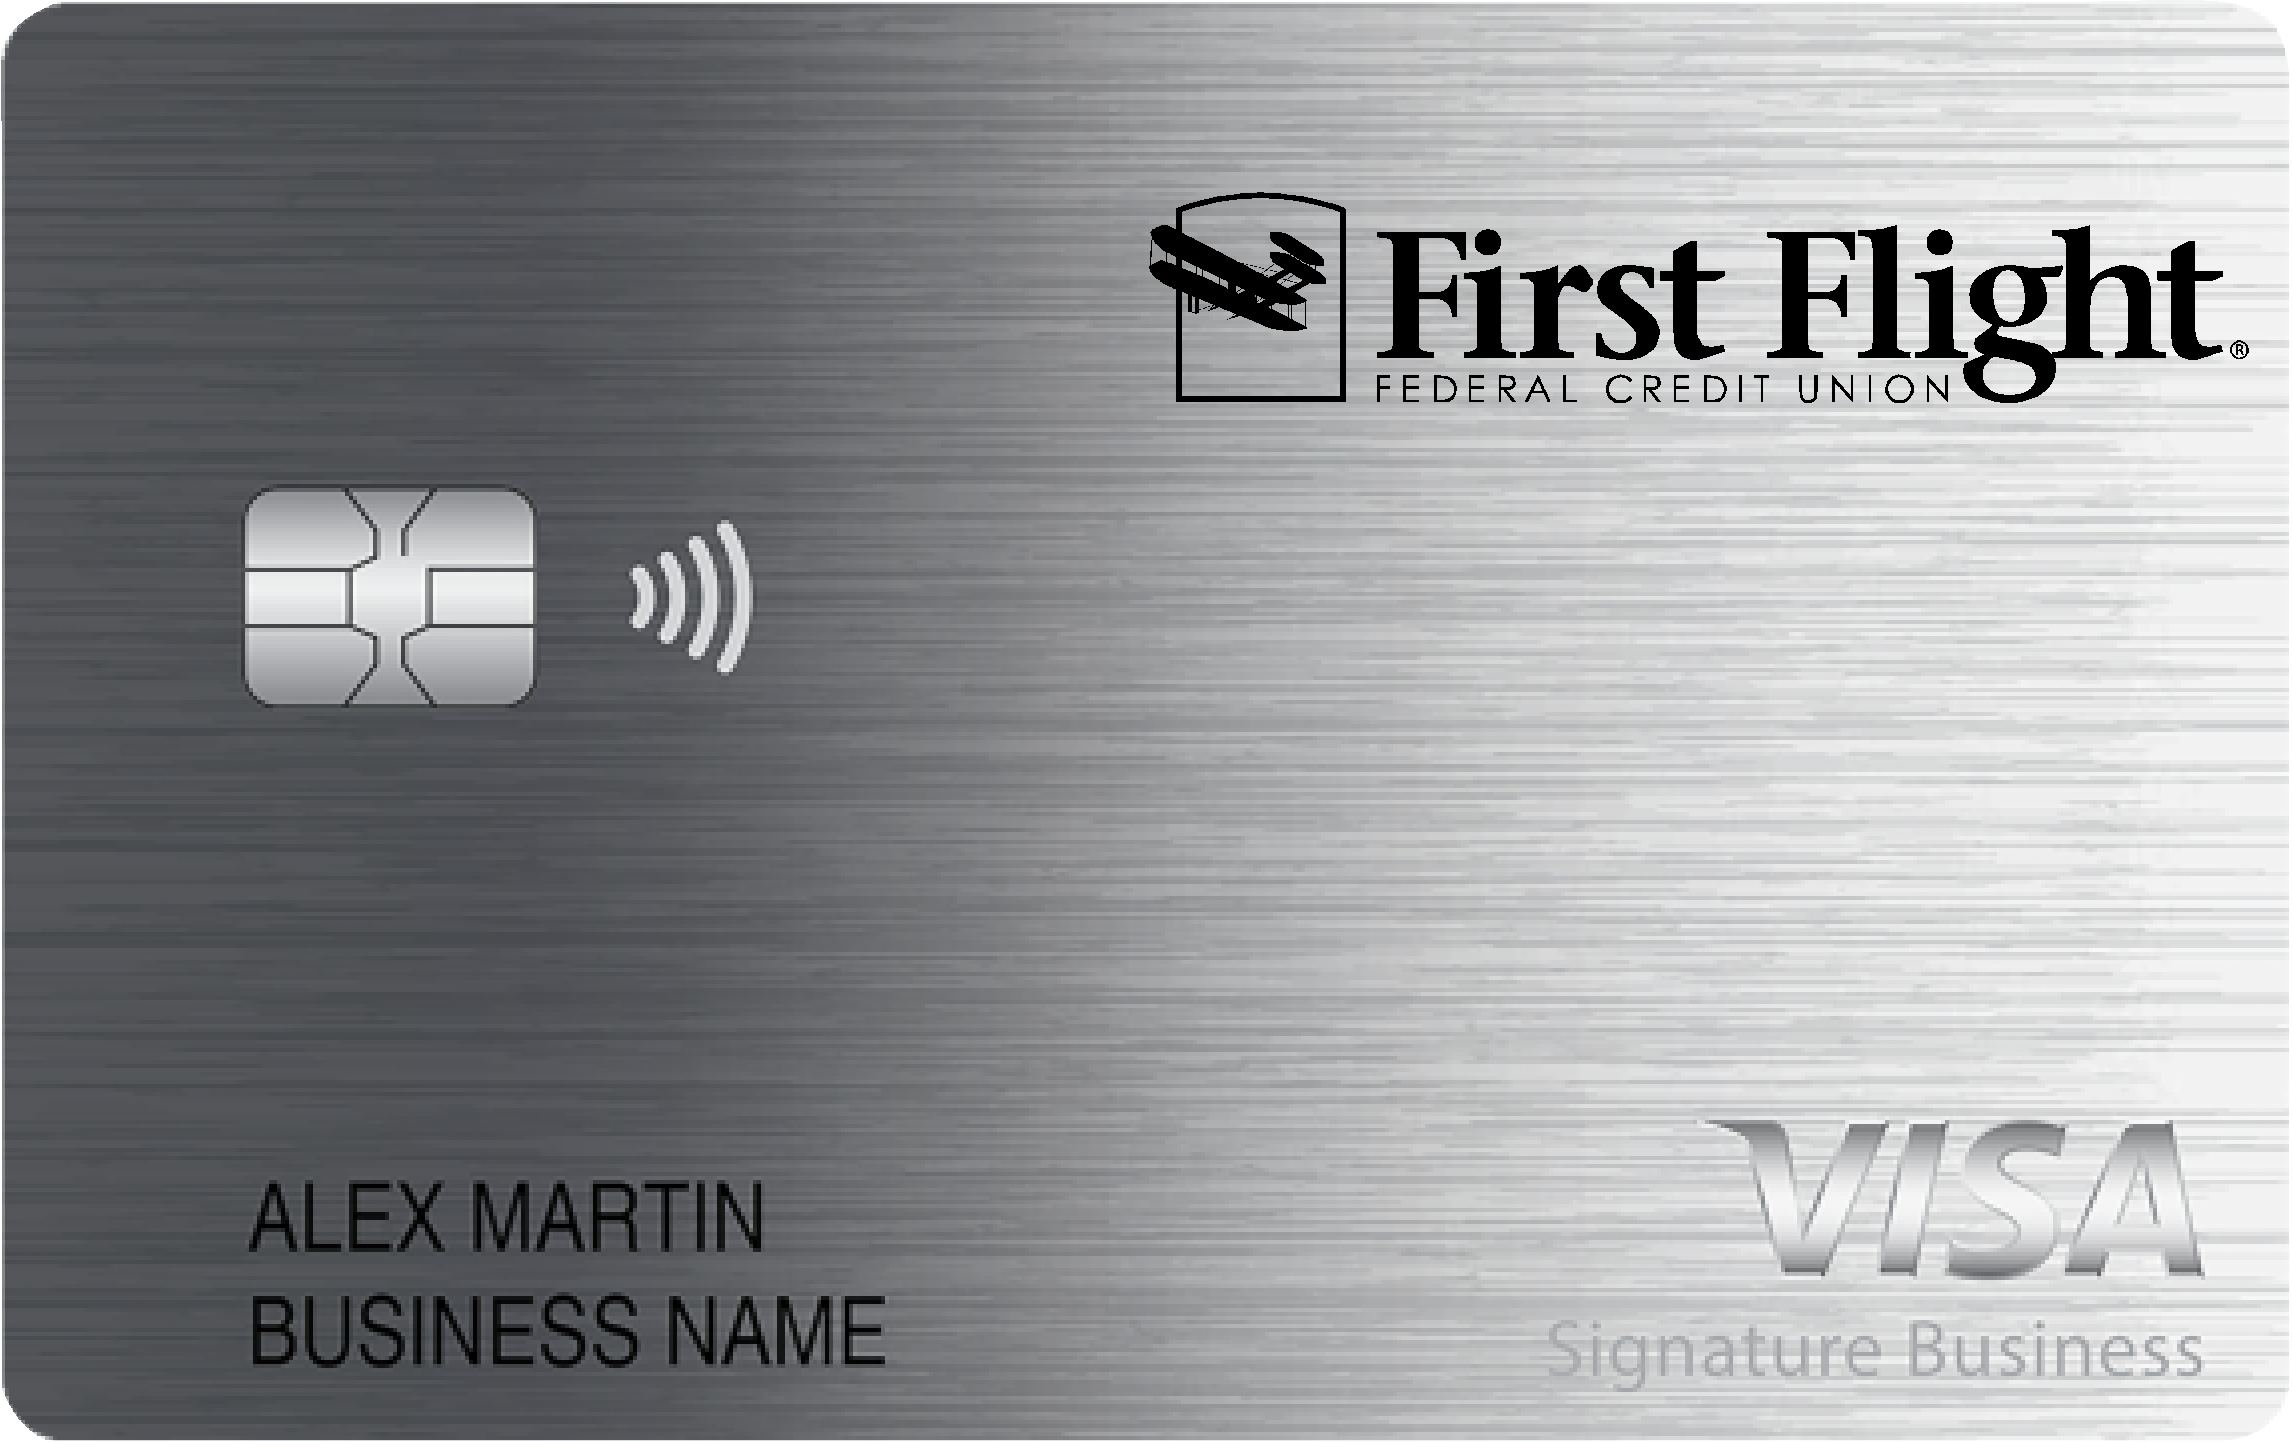 First Flight Federal Credit Union Smart Business Rewards Card